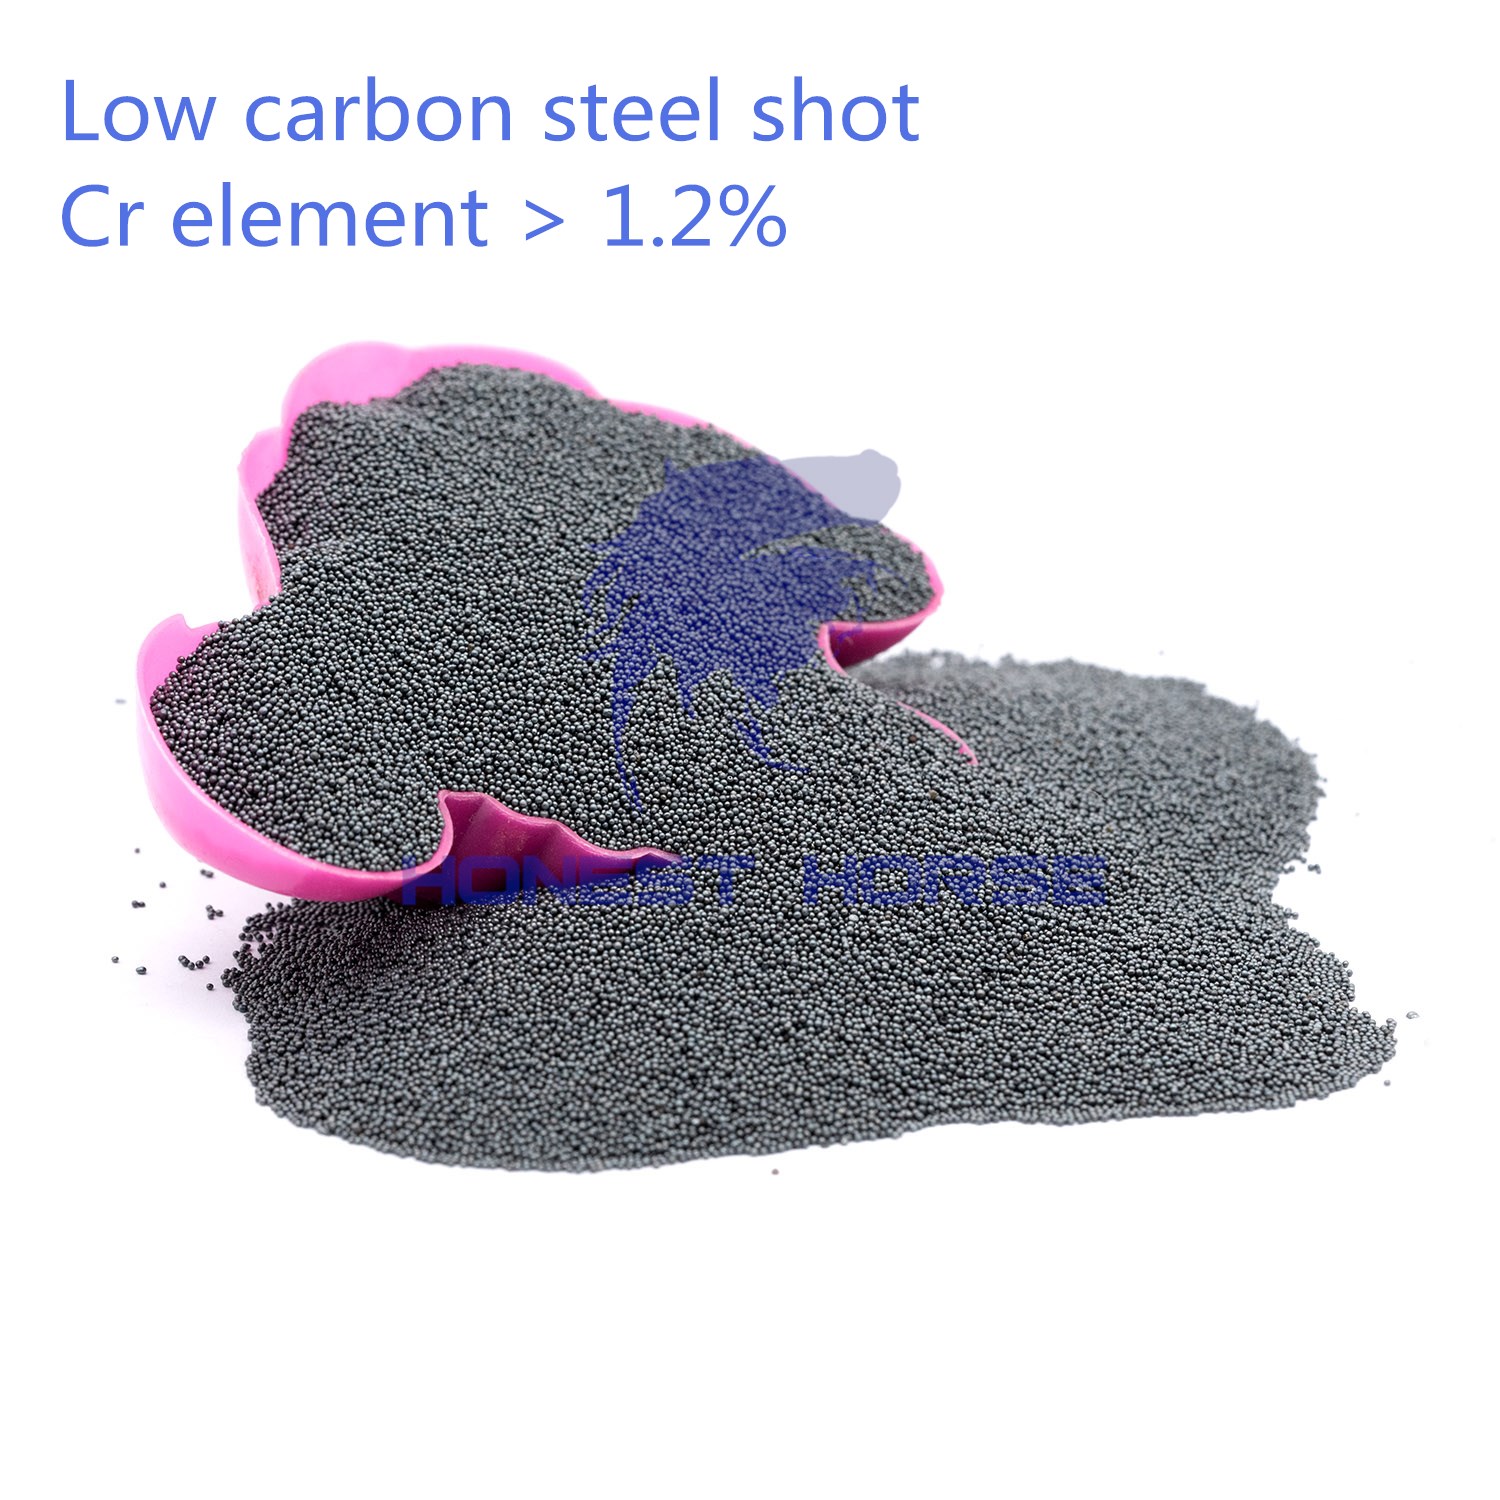 Low carbon steel shot